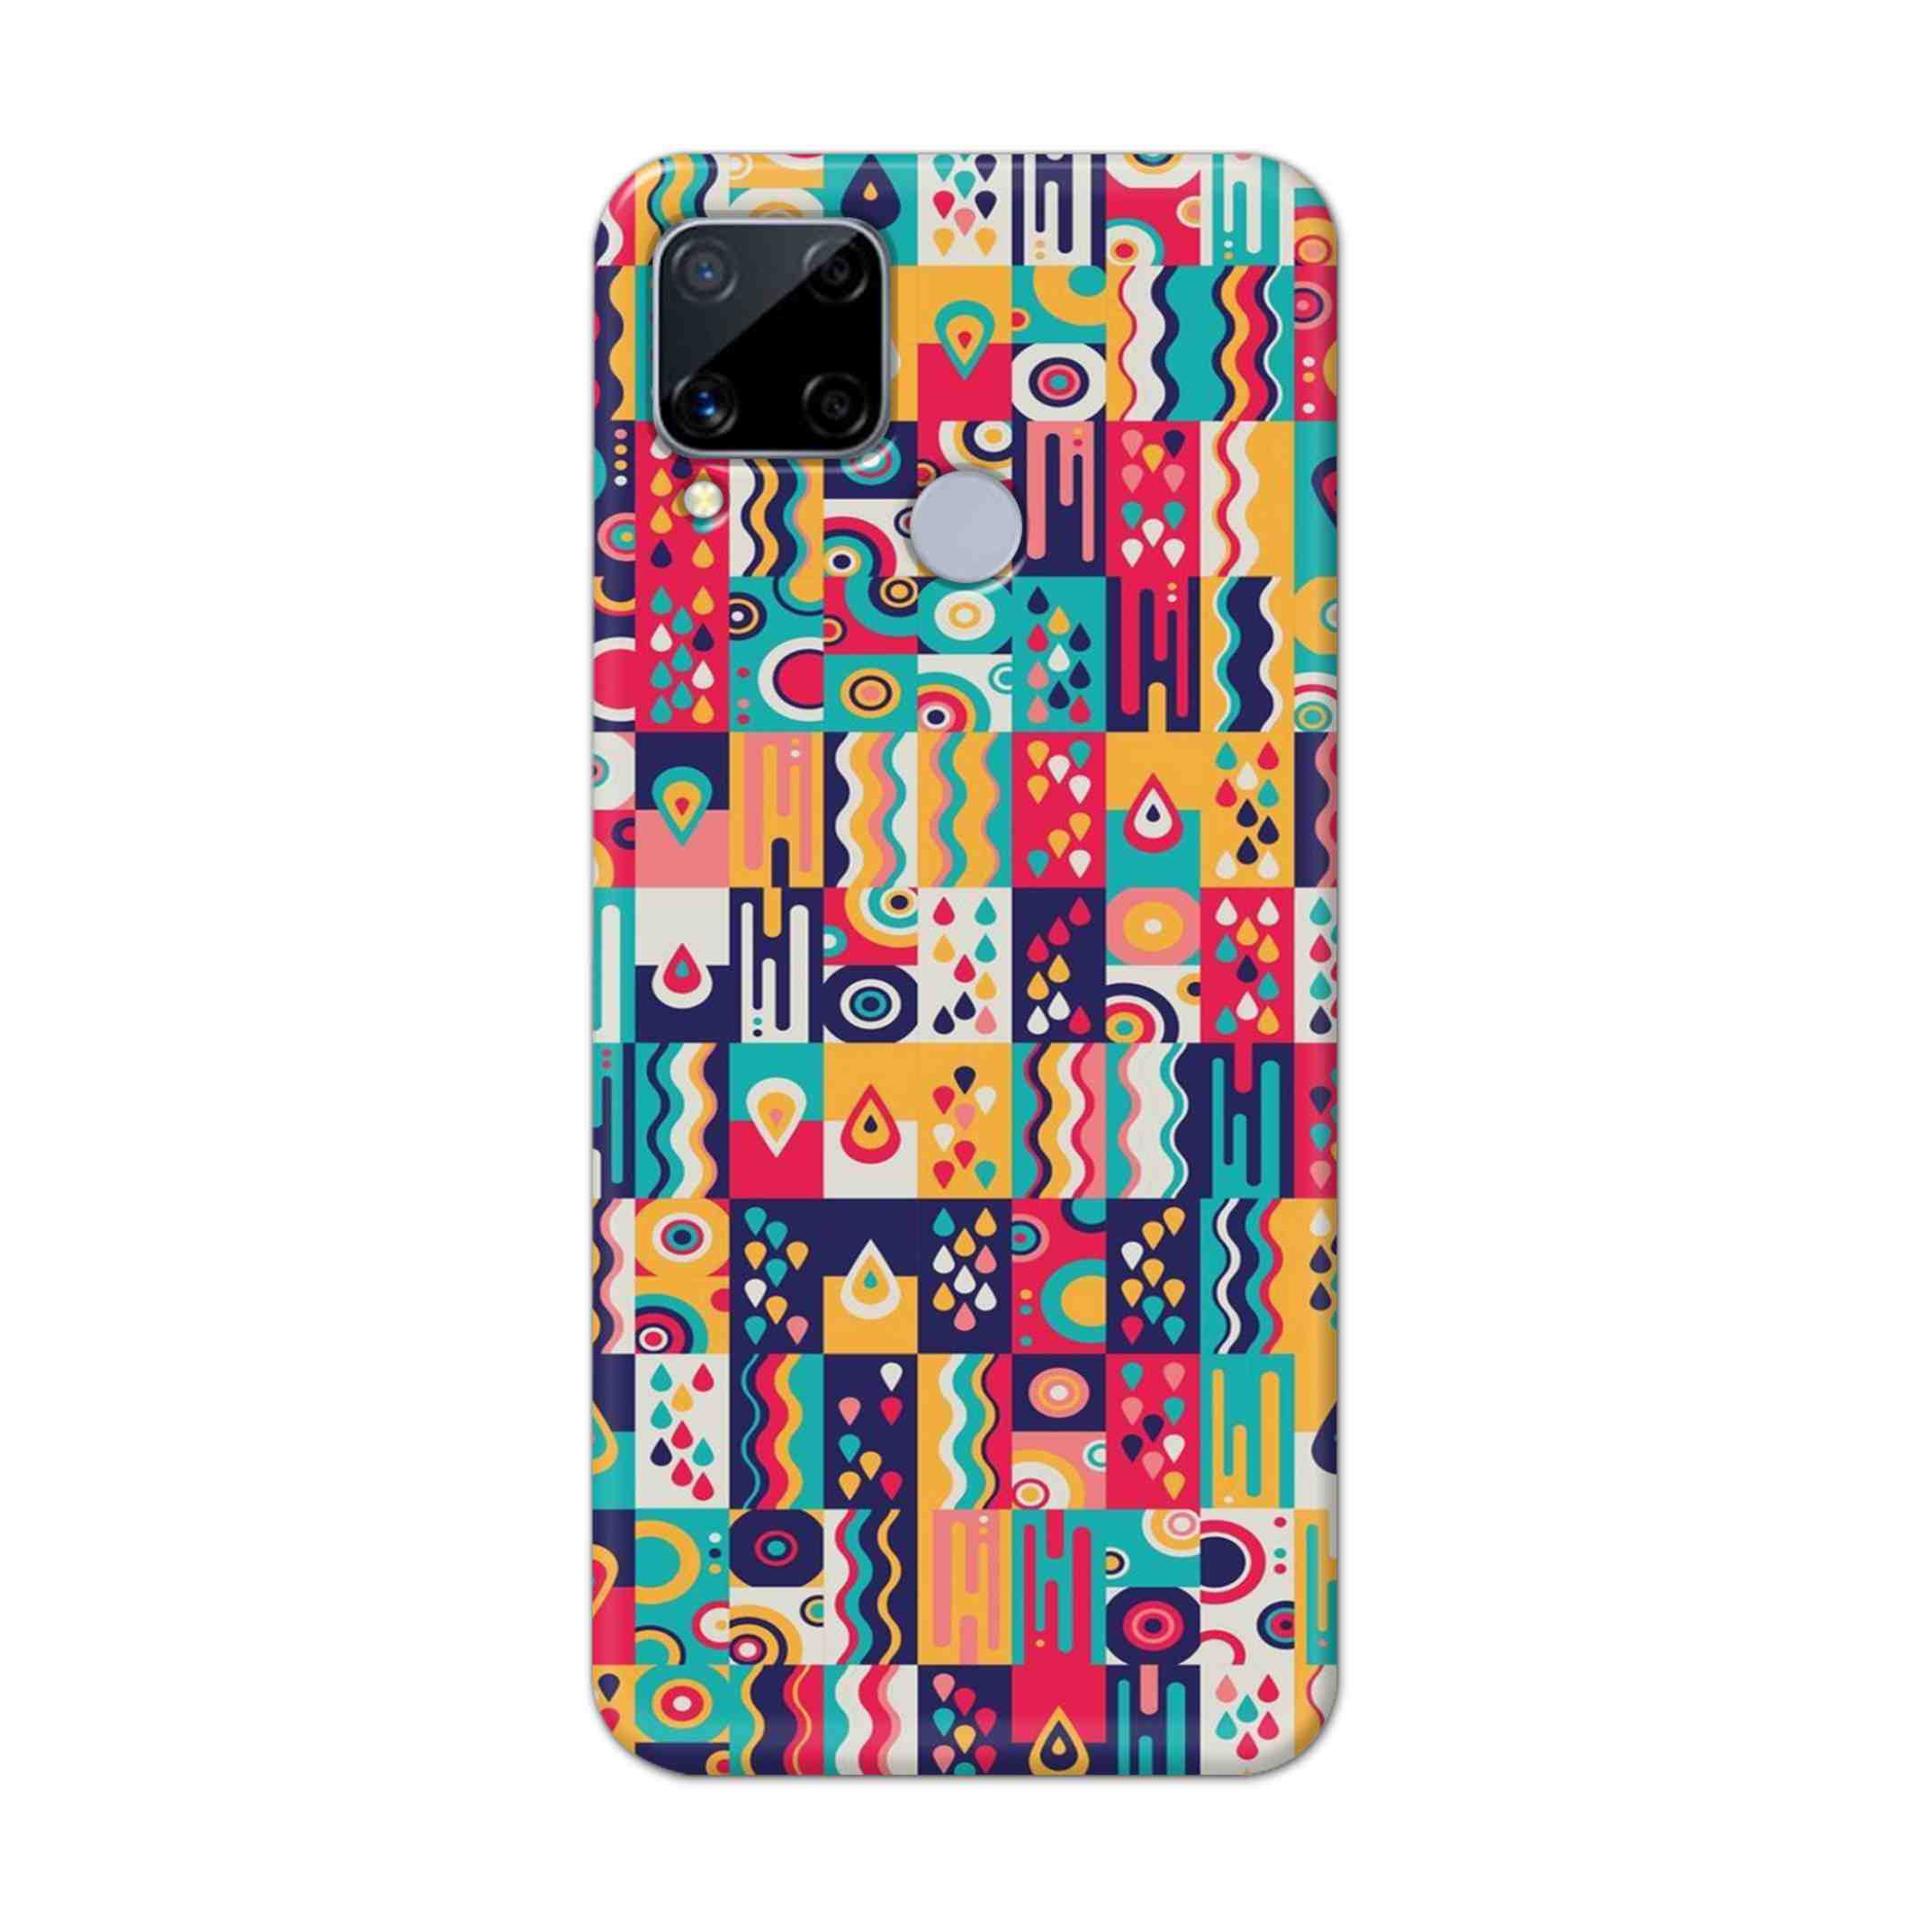 Buy Art Hard Back Mobile Phone Case Cover For Realme C15 Online